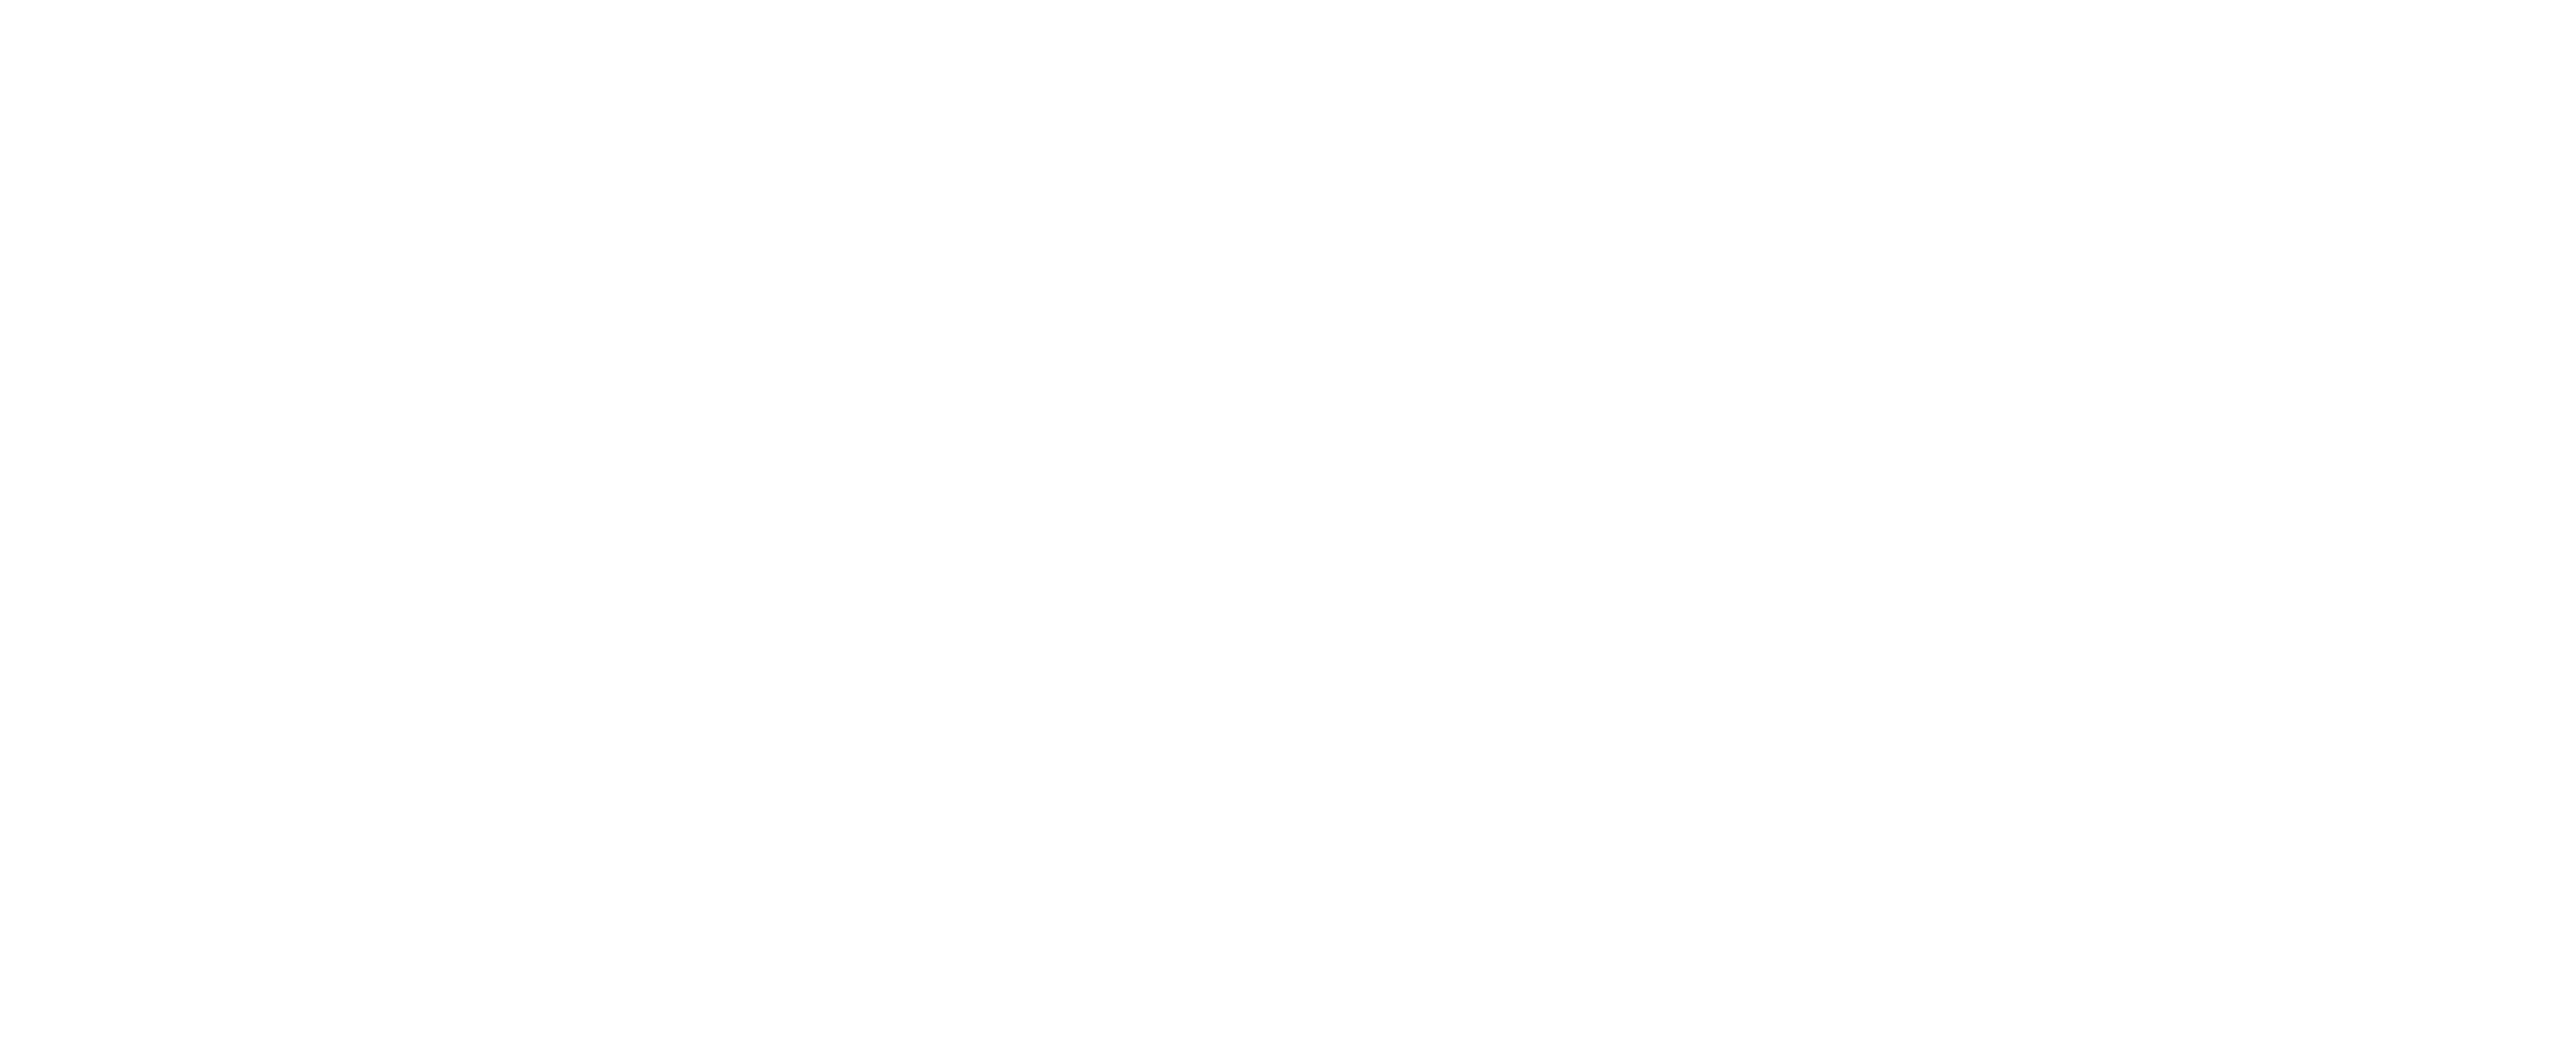 Longview at Georgetown Logo